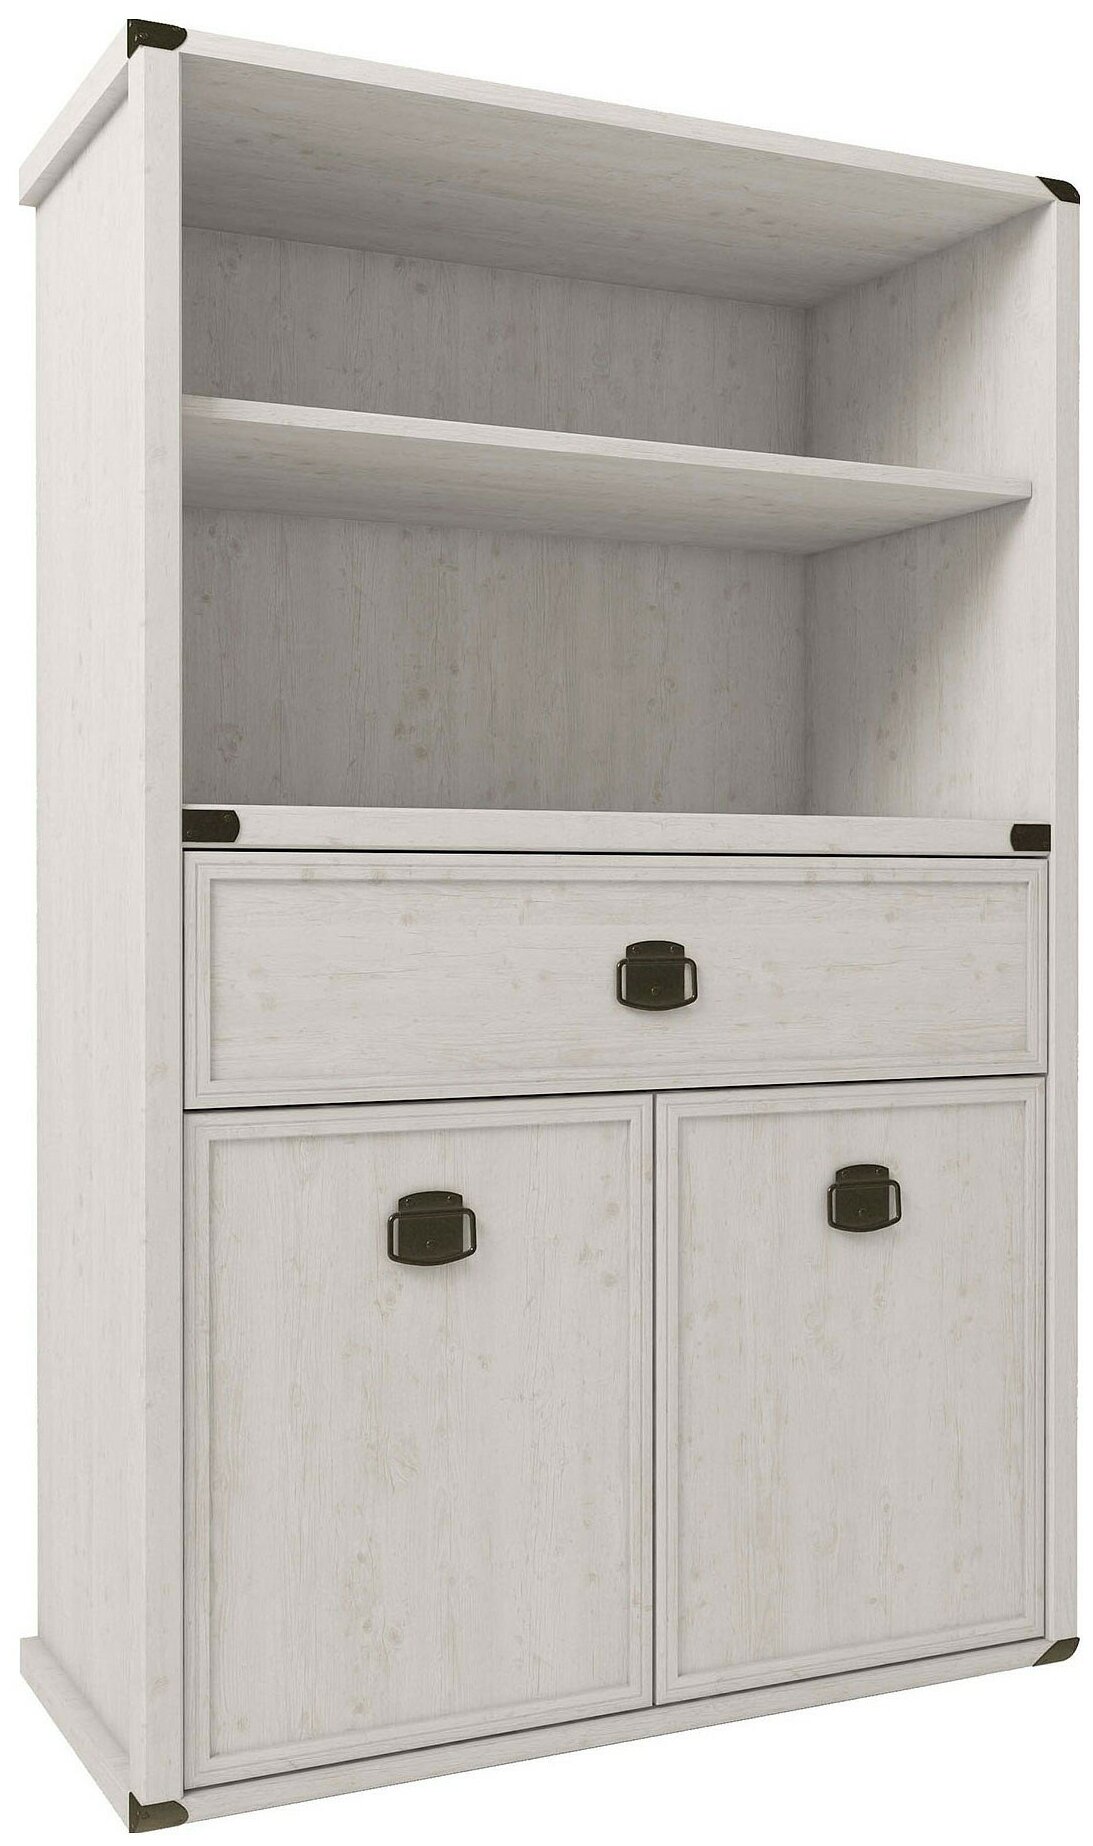 MAGELLAN (Сосна Винтаж) Anrex Шкаф открытый 2D1S, MAGELLAN, цвет Сосна винтаж